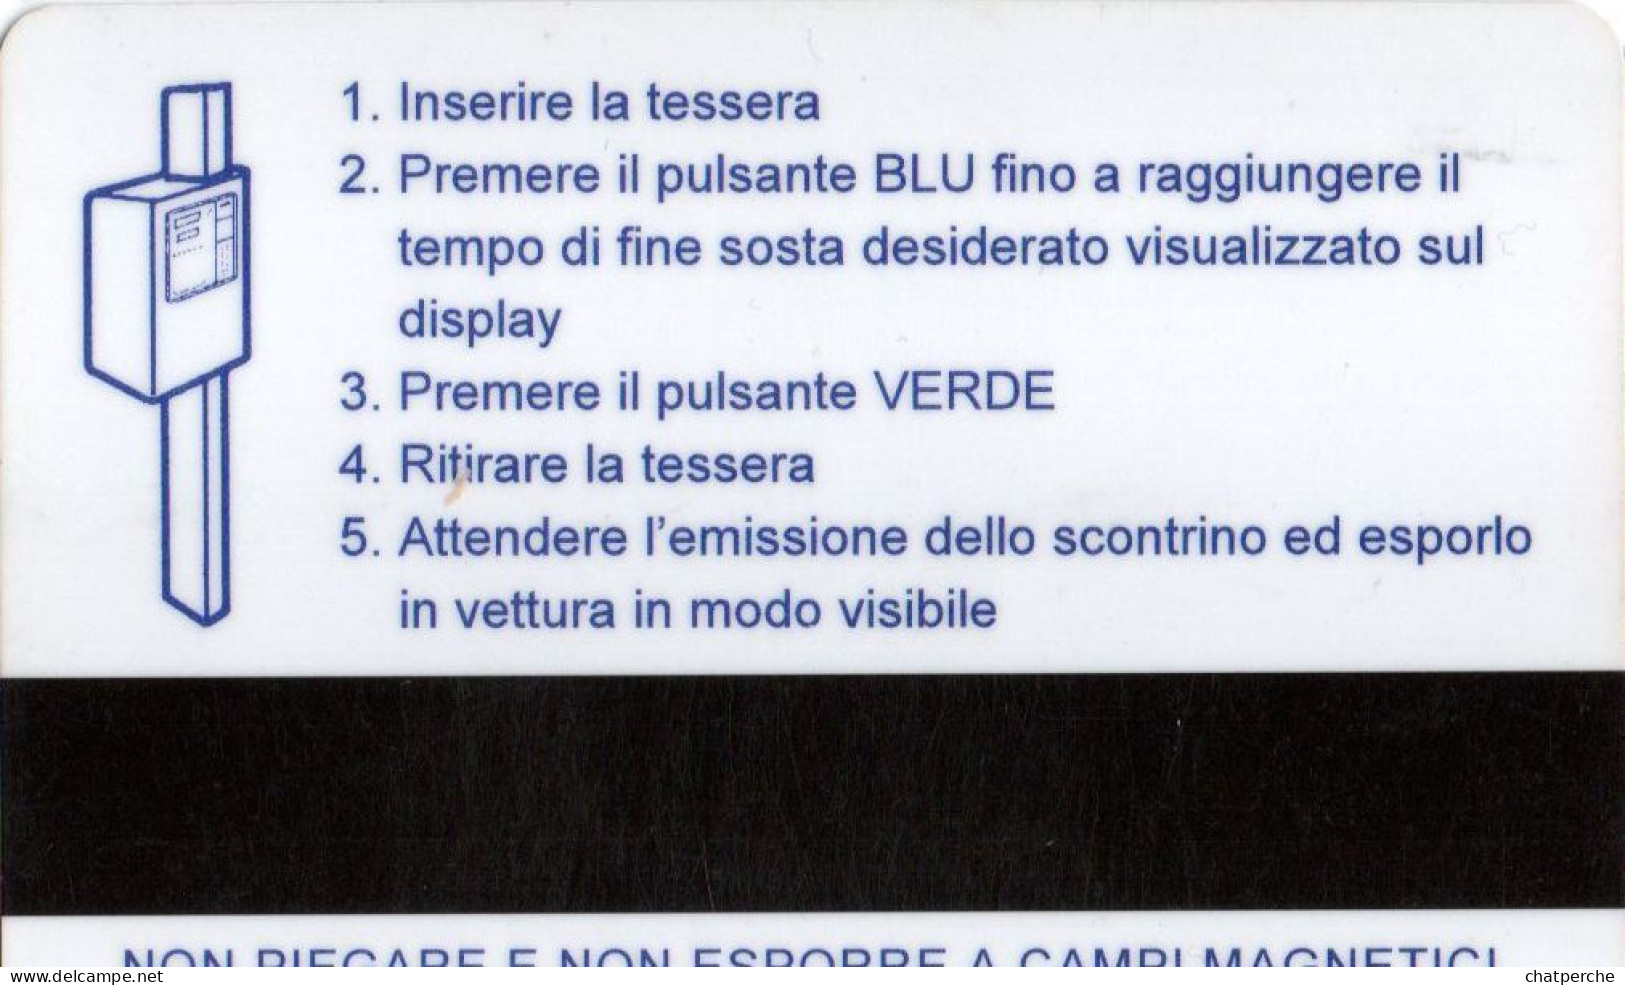 CARTE STATIONNEMENT BANDE MAGNETIQUE PARKING LINE PARK CARD...  ITALIE - Other & Unclassified